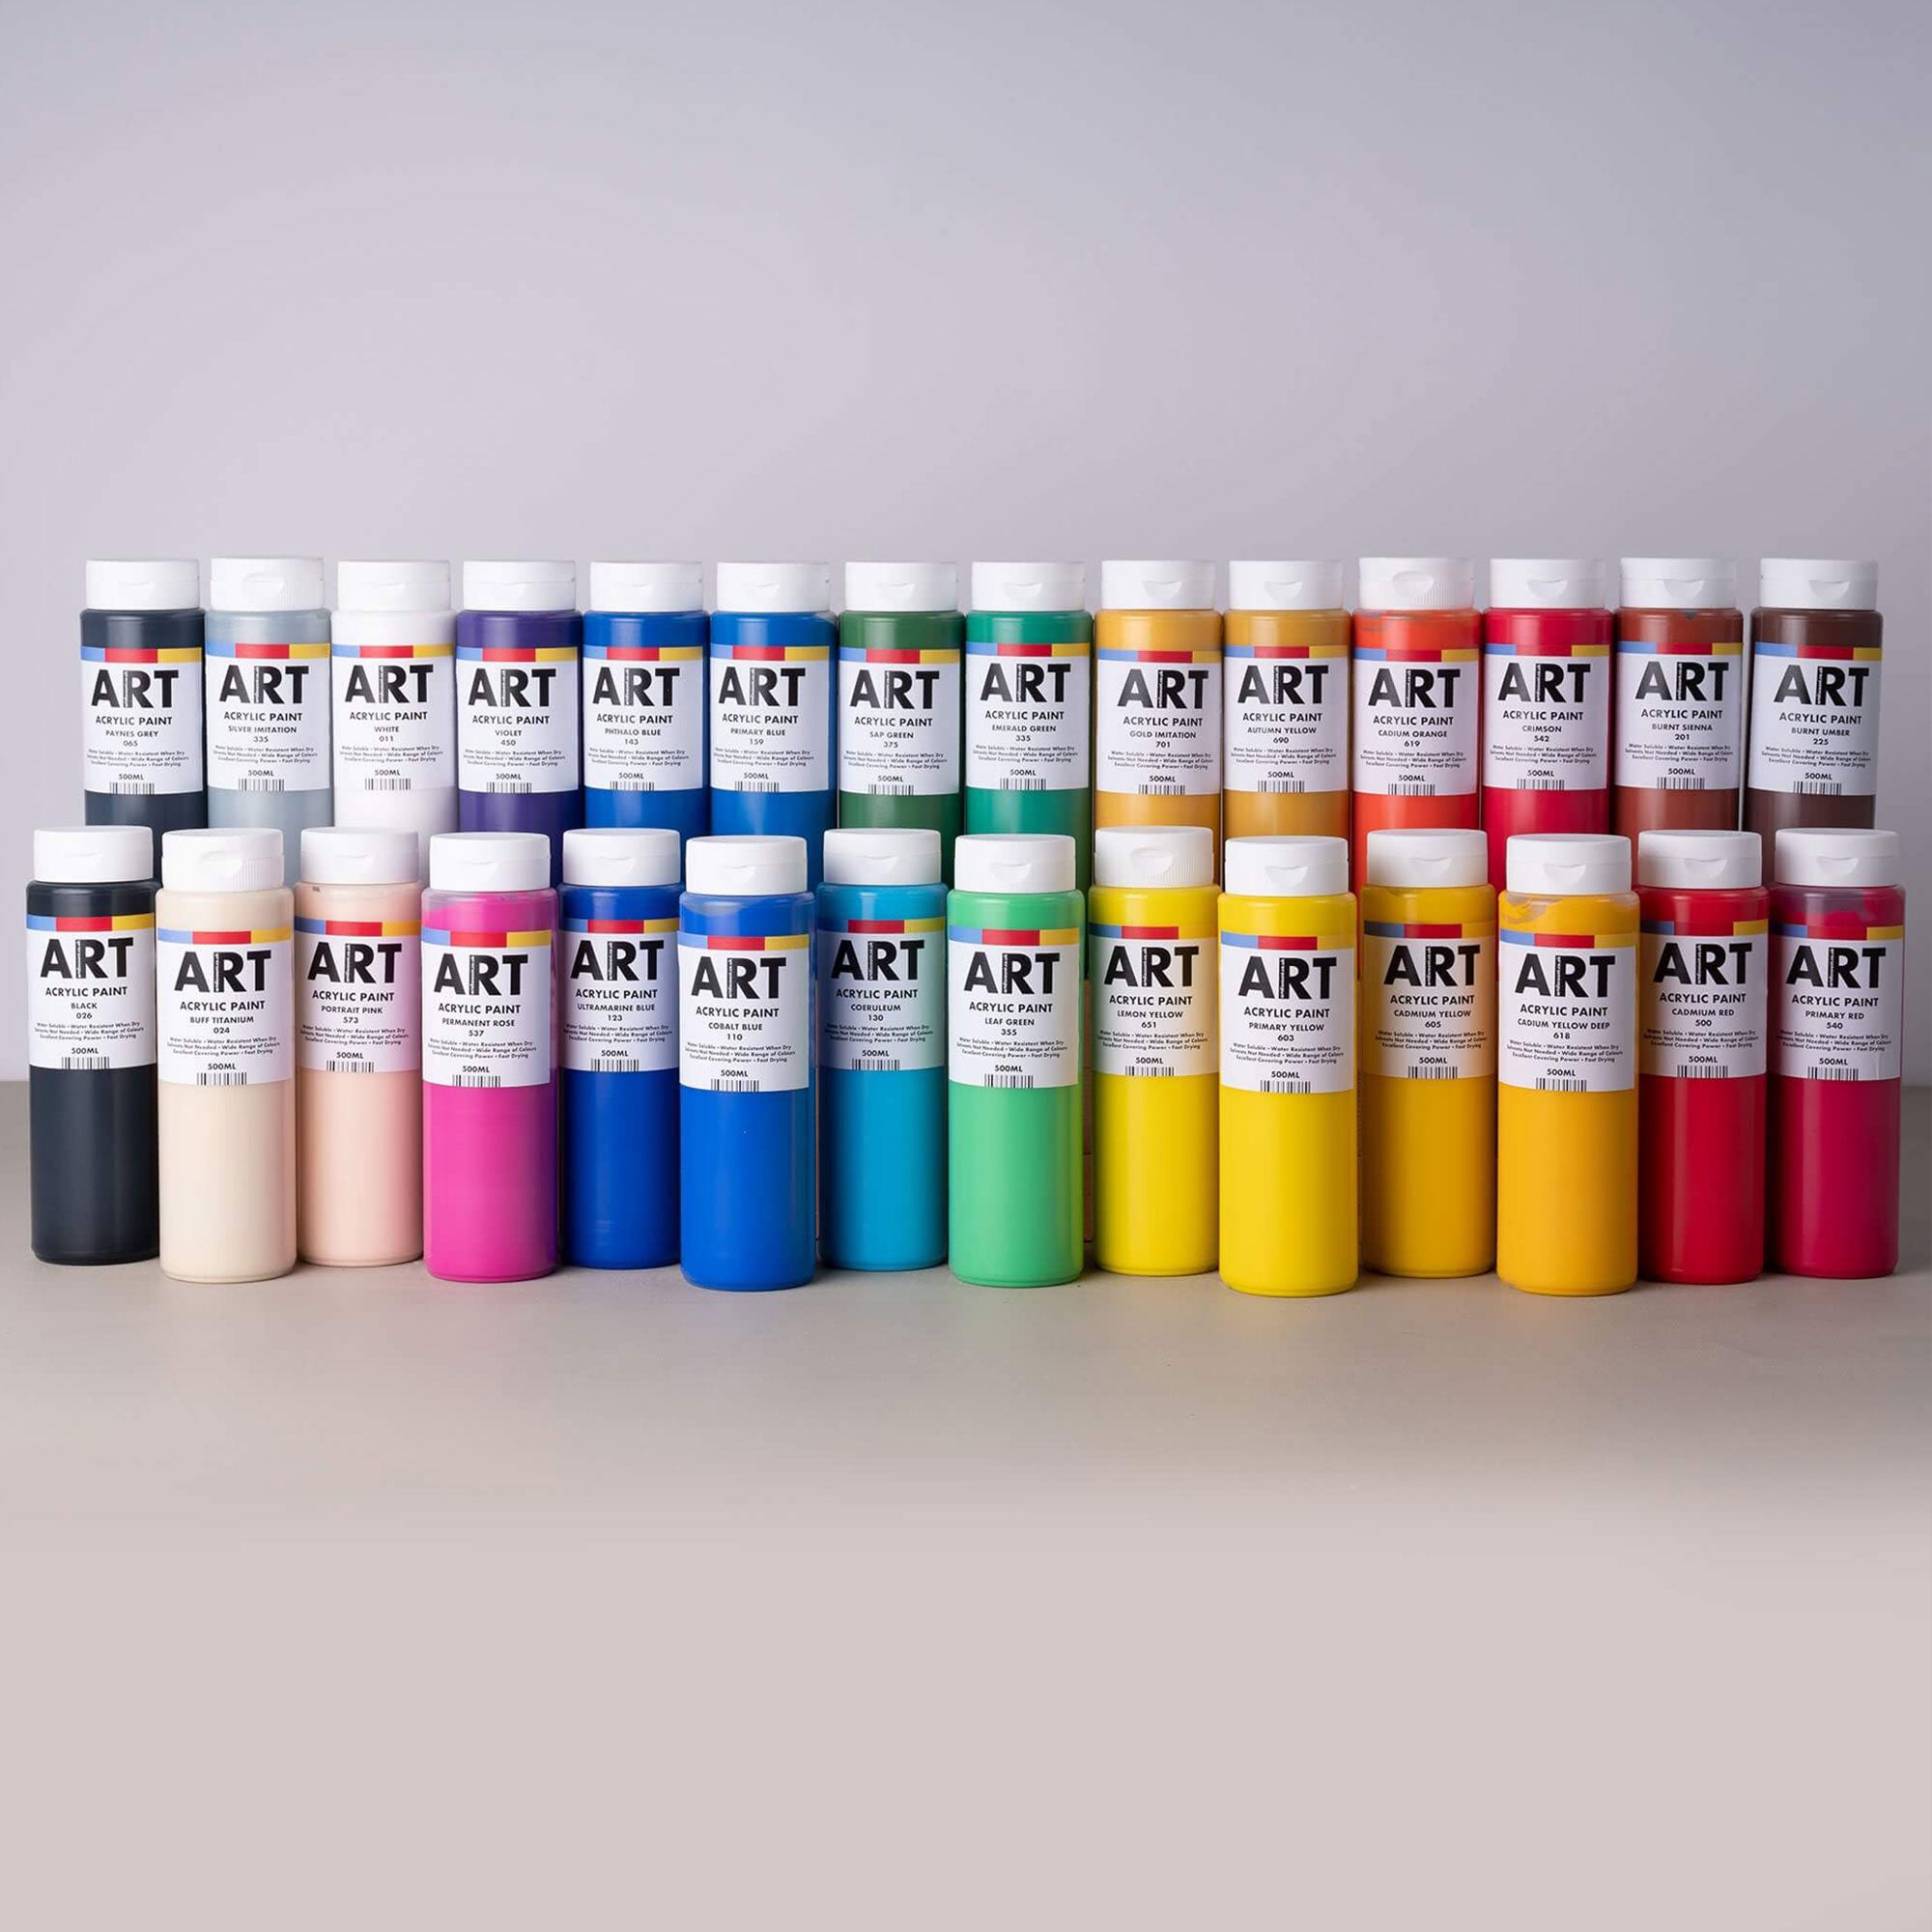 MEEDEN Pastel Acrylic Paint Set, 12 Tubes, 22 ml / 0.74 oz